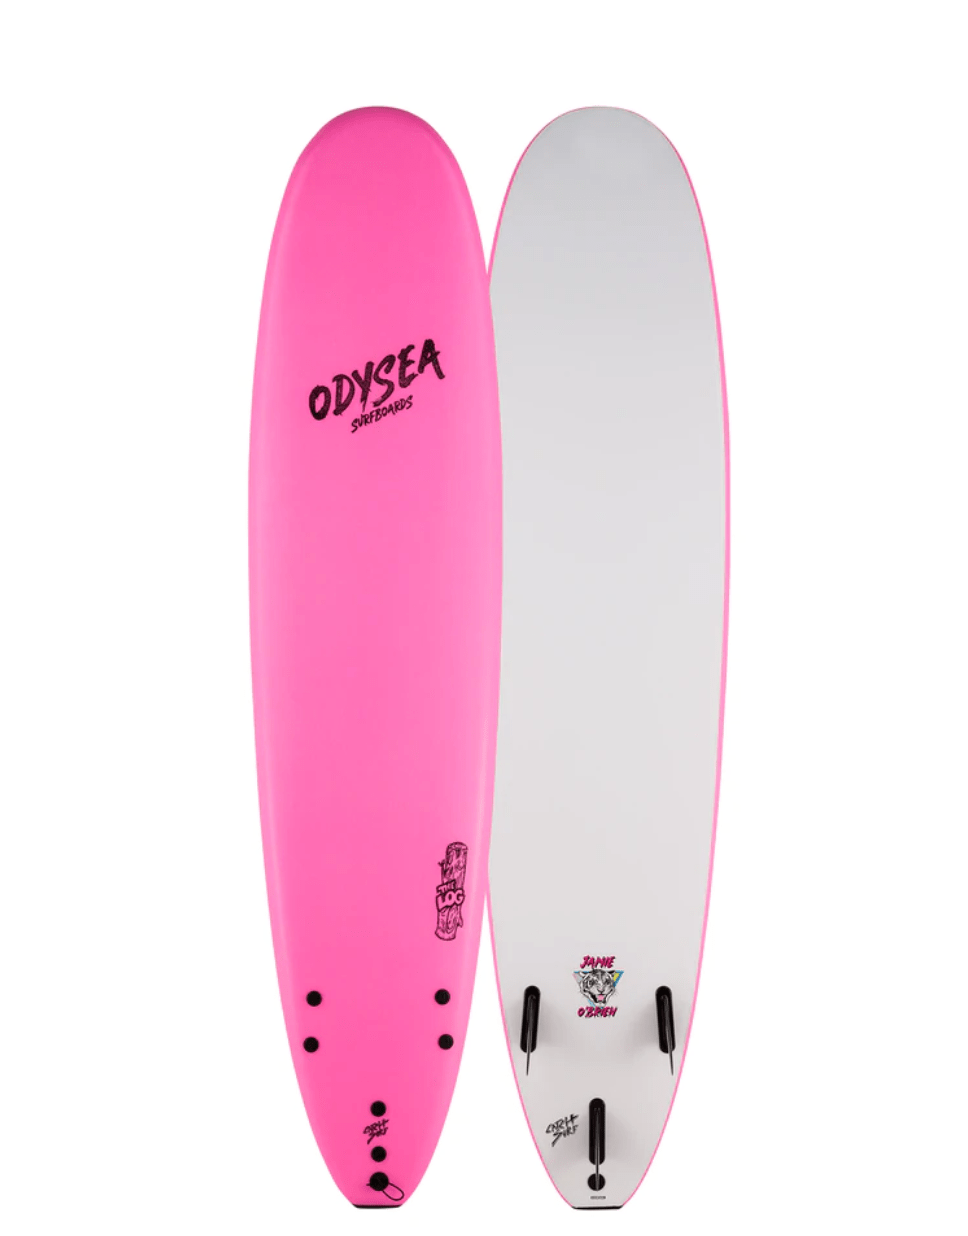 Catch Surf Odysea 8'0 Log Basic Jamie O'Brien - Hot Pink - Good Wave